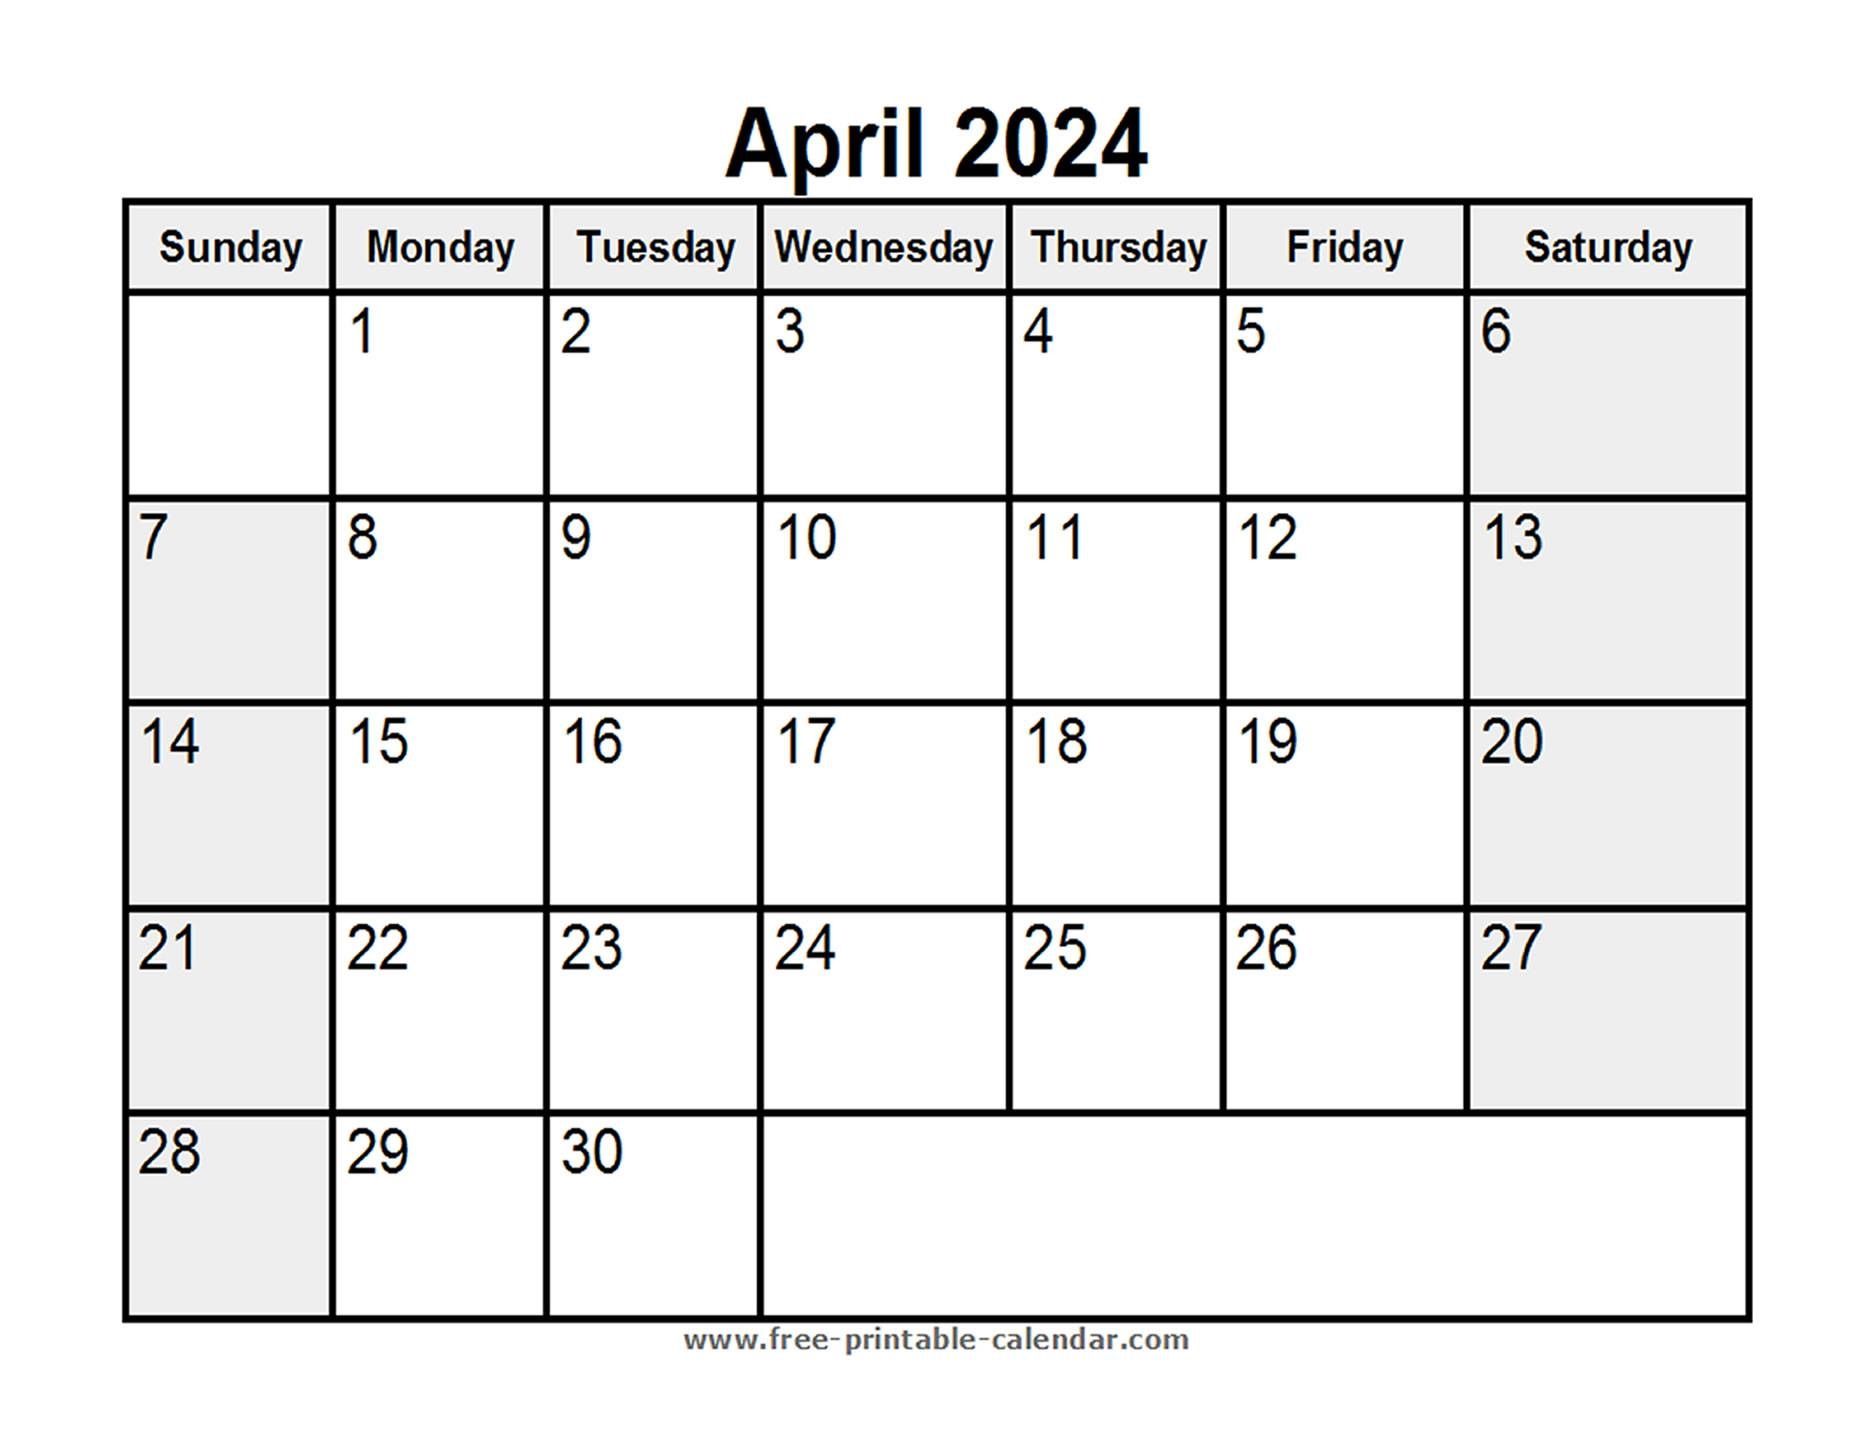 Free Printable Black And White April 2024 Calendar - Printable Calendar